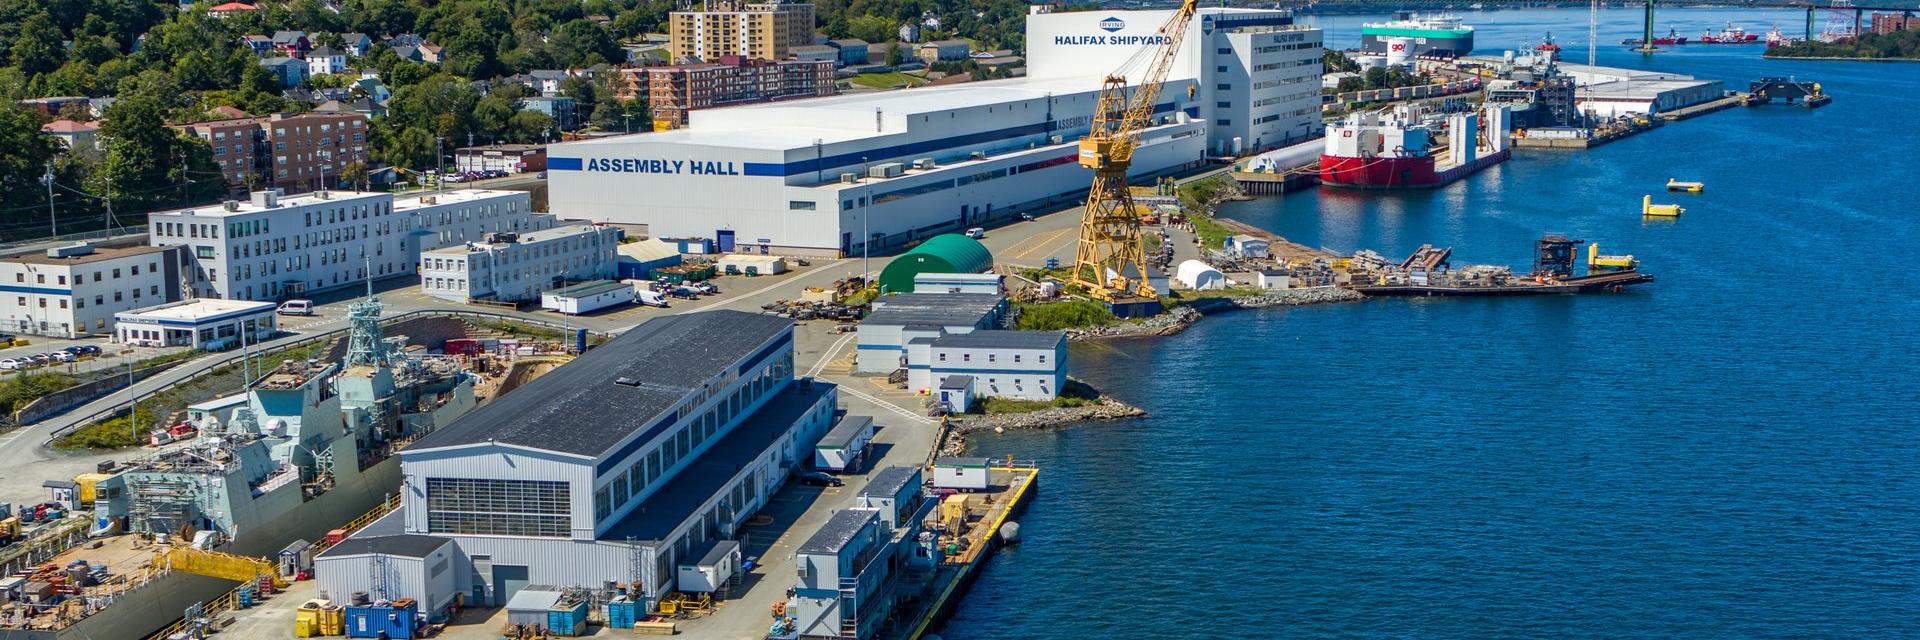 Irving Shipyard in Nova Scotia, Canada